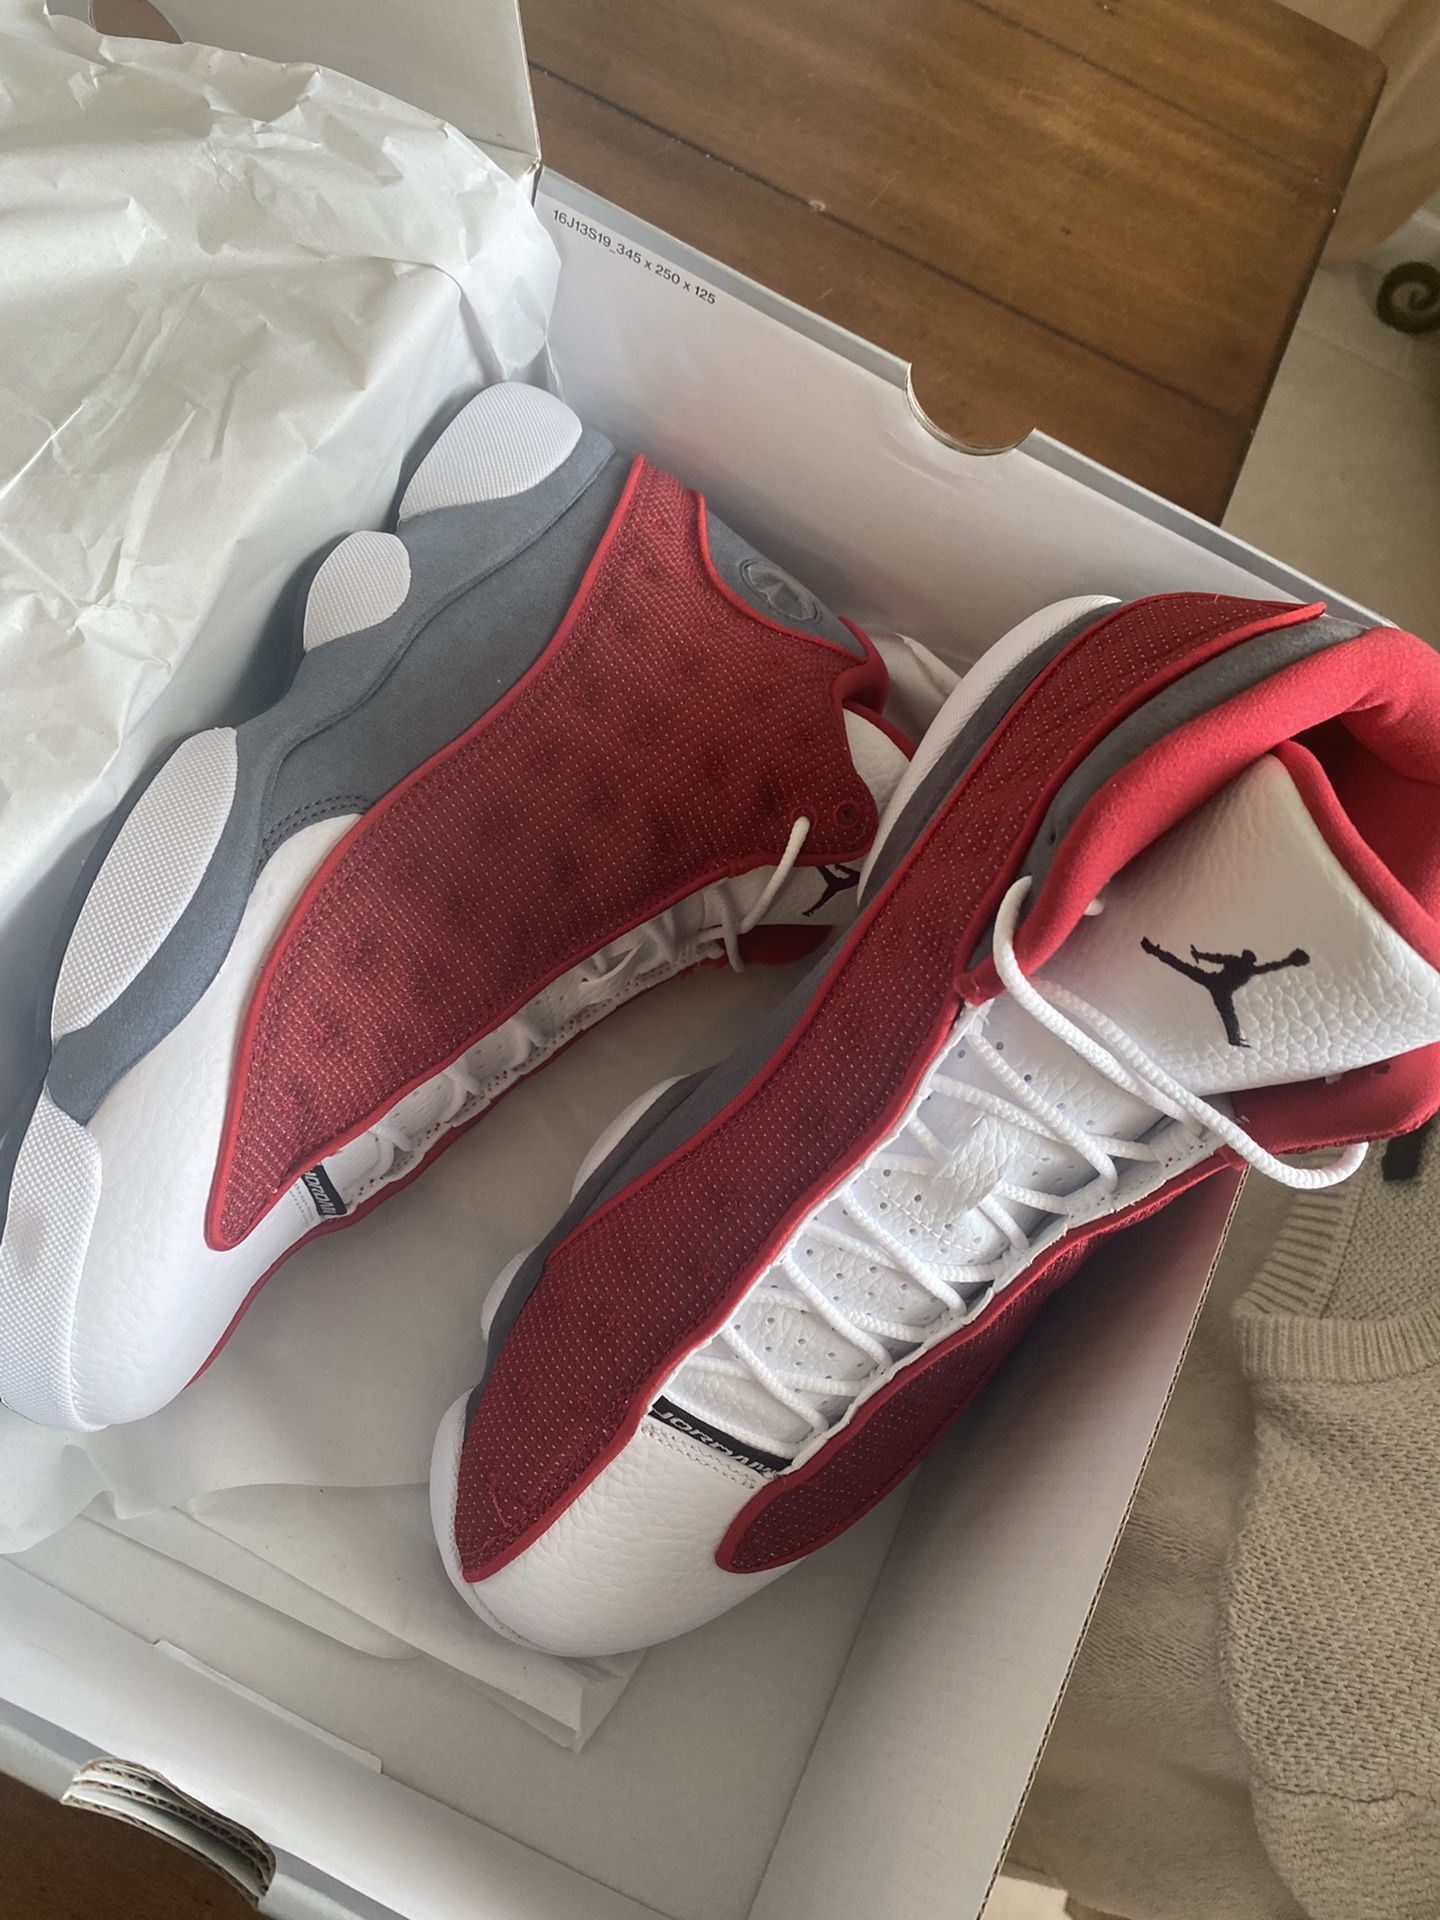 Air Jordan 13 Retro “Gym Red Flint Grey”